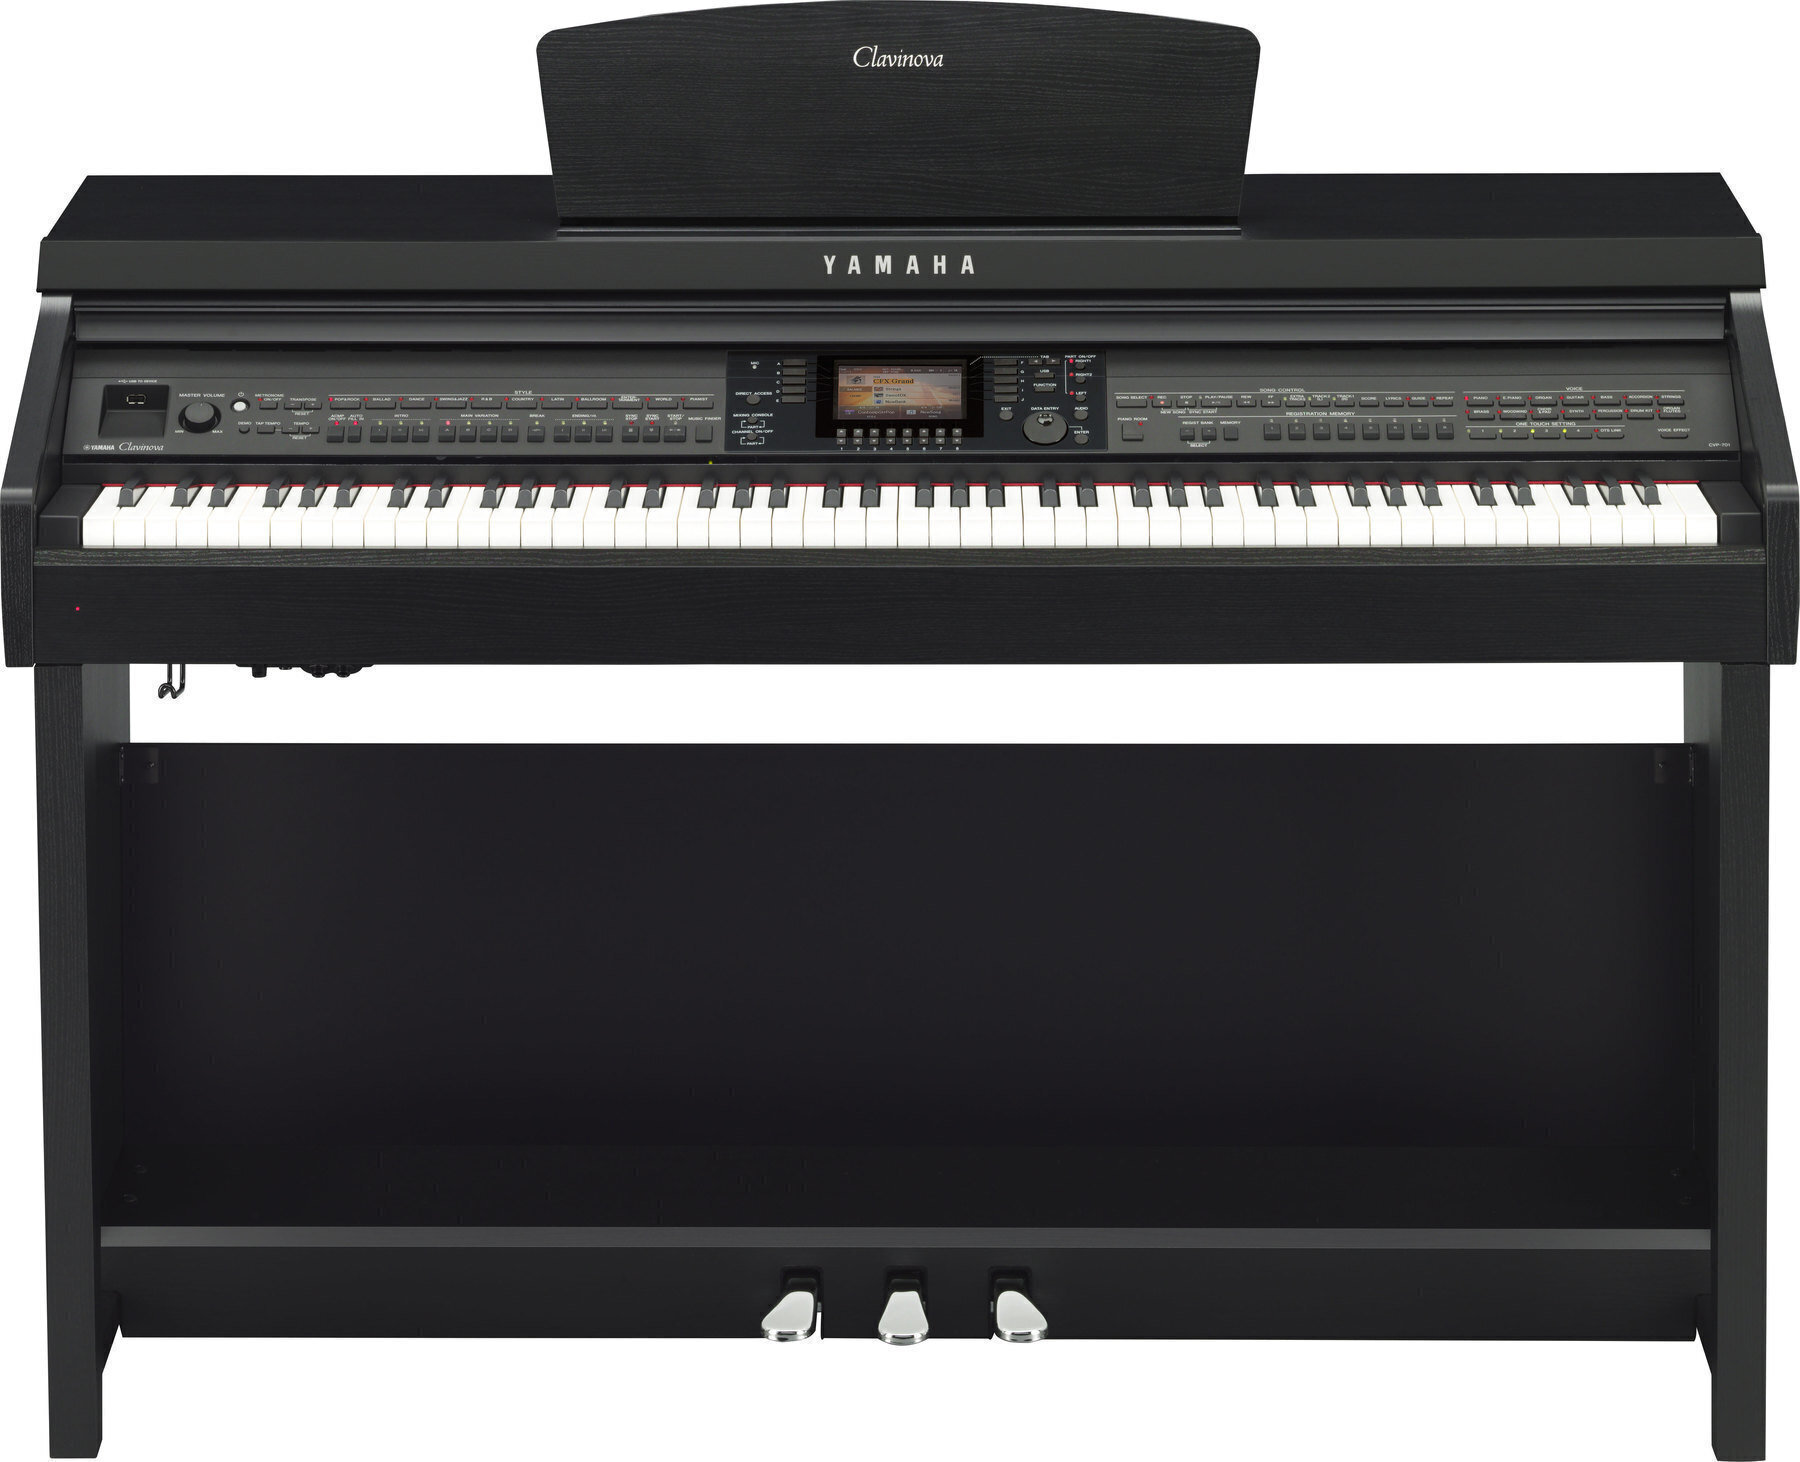 Digital Piano Yamaha CVP 701 Black Digital Piano